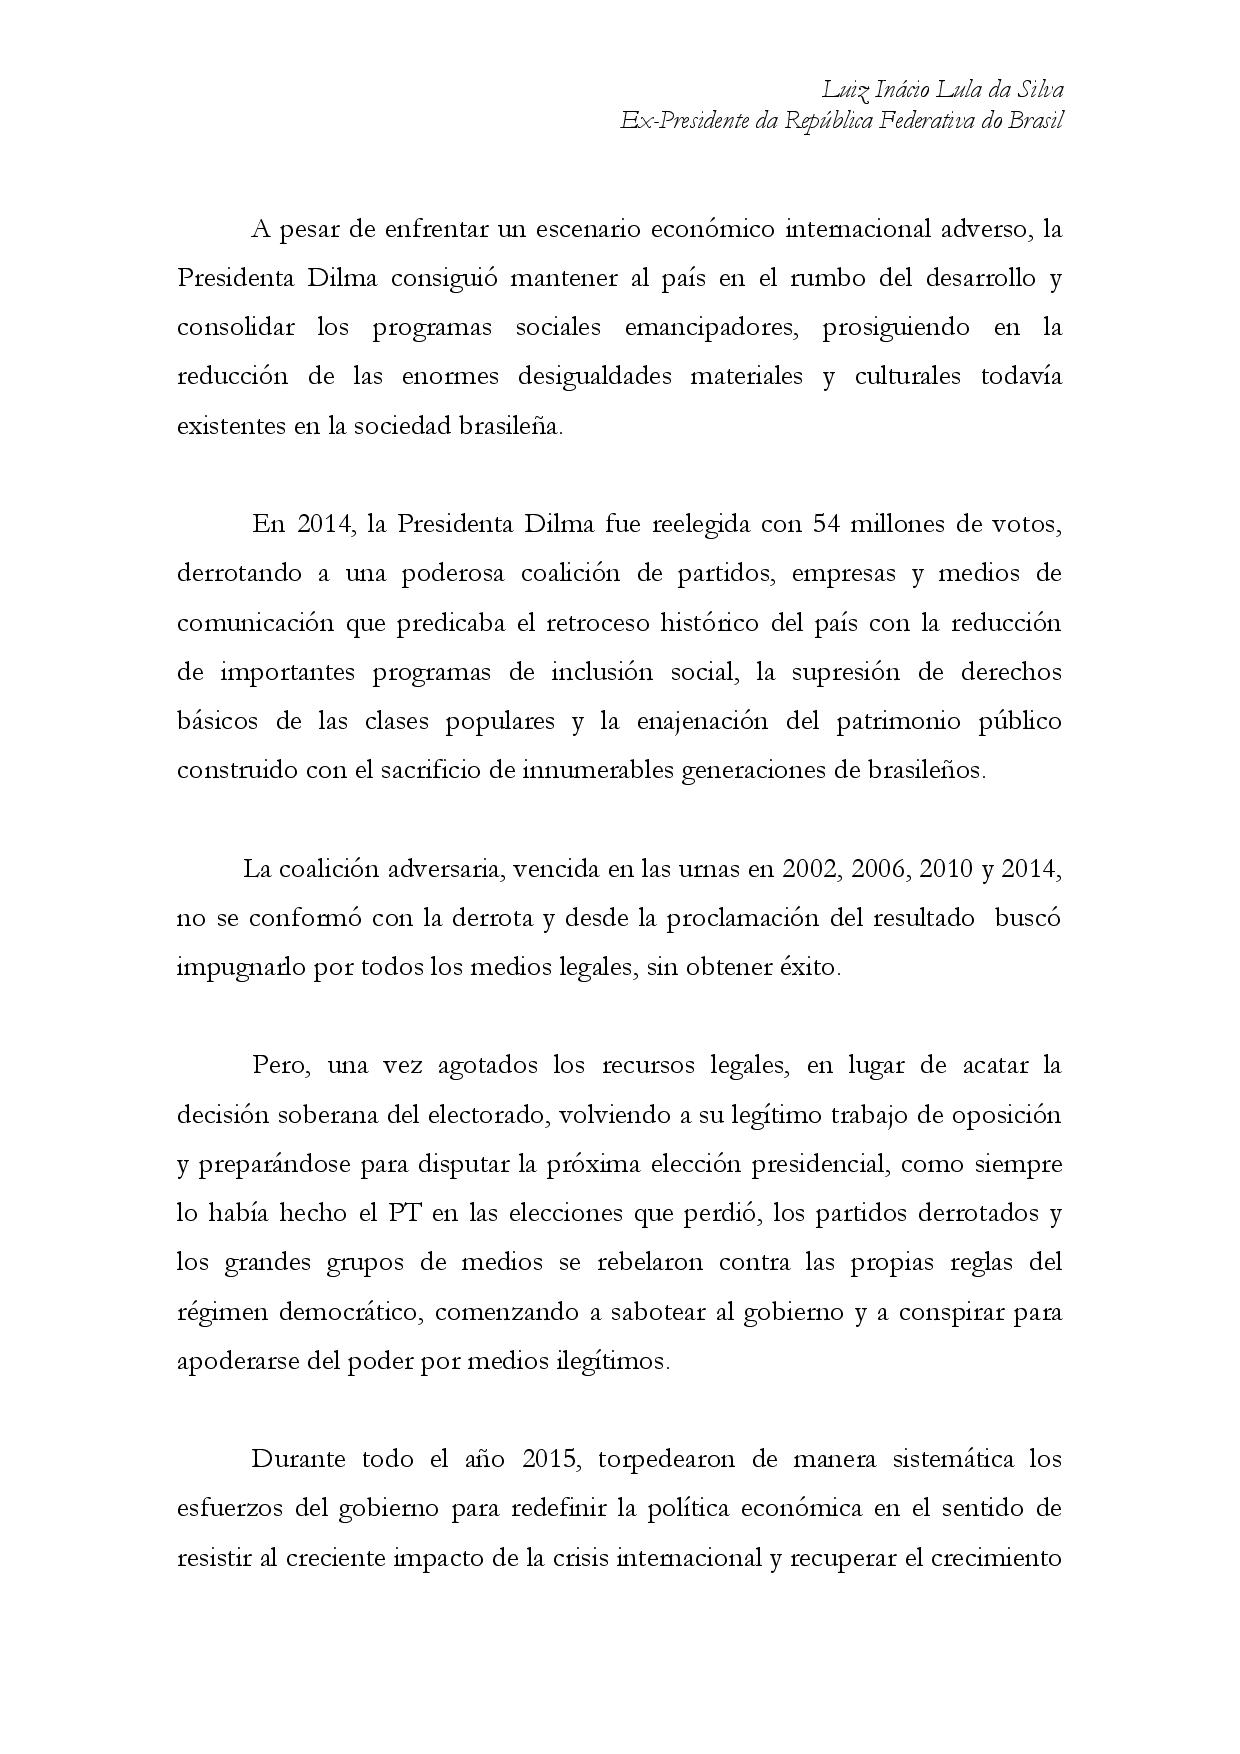 Argentina Ex-presidenta-page-002